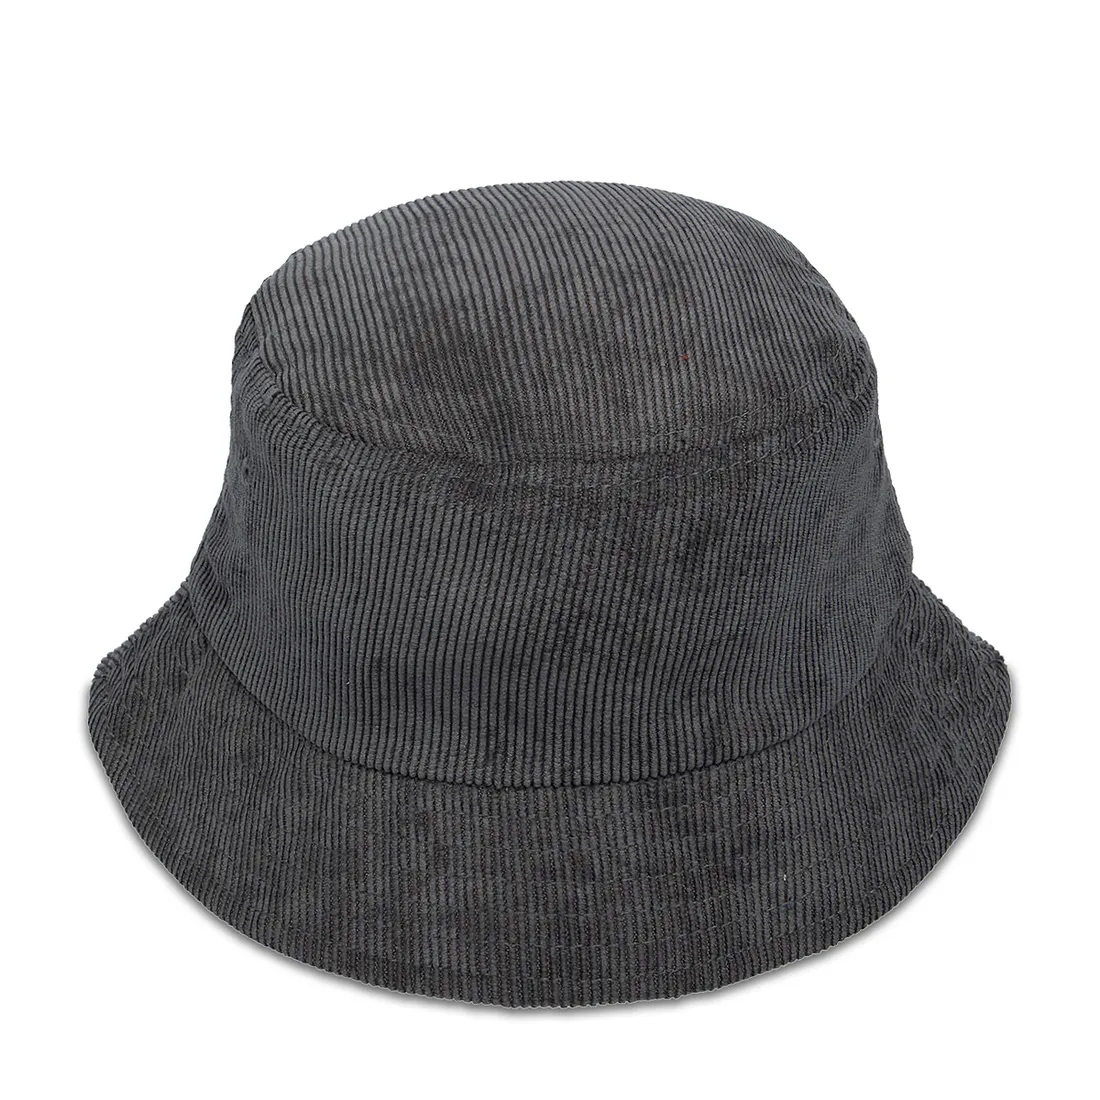 Corduroy bucket hat dark grey - Boys 7-15 YEARS Accessories | Ackermans